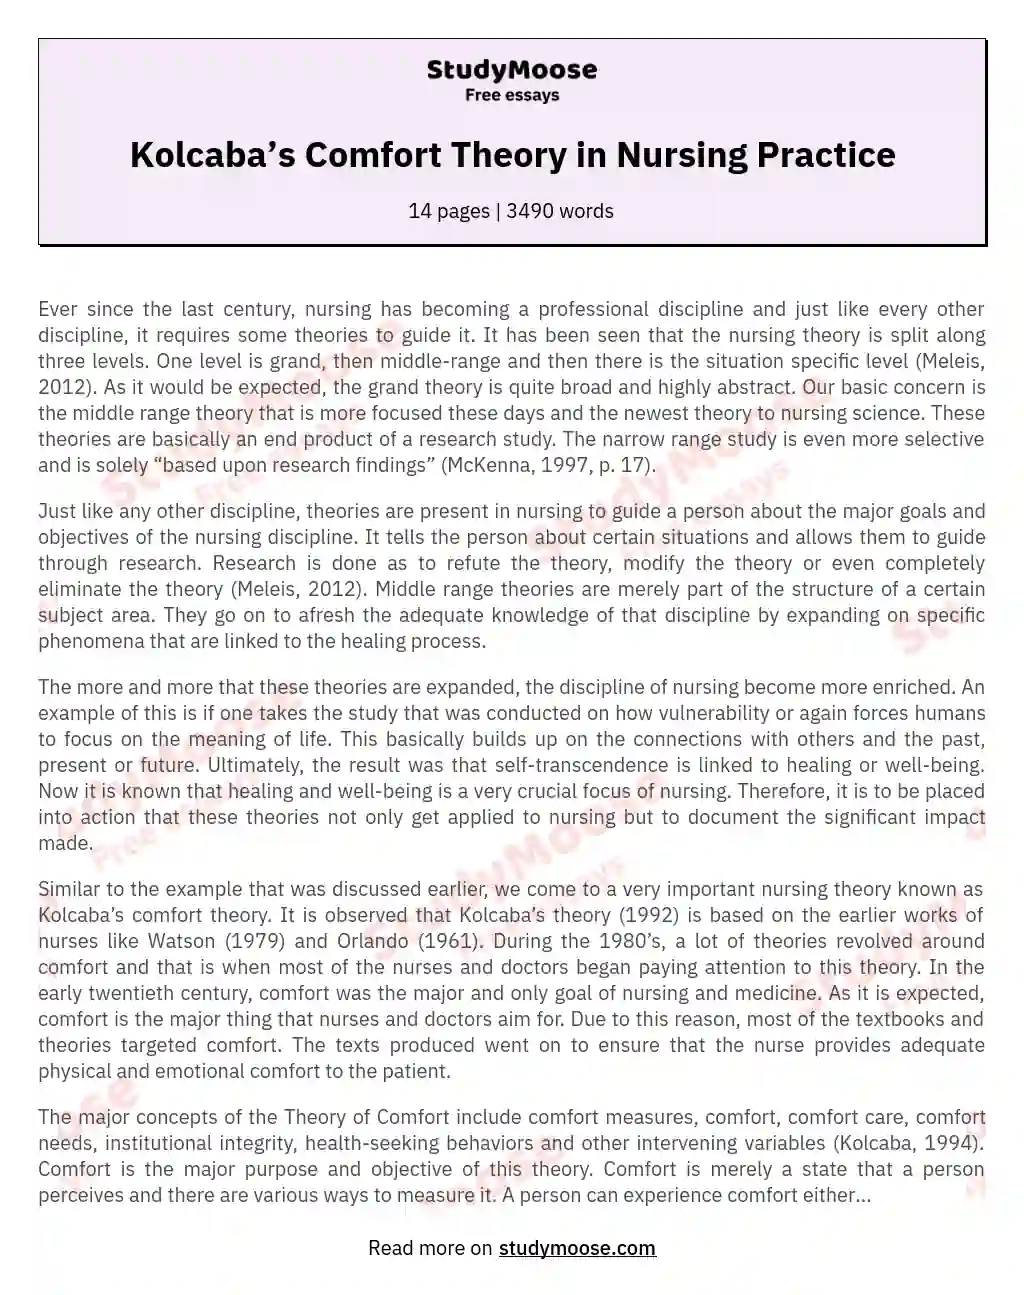 Kolcaba’s Comfort Theory in Nursing Practice essay